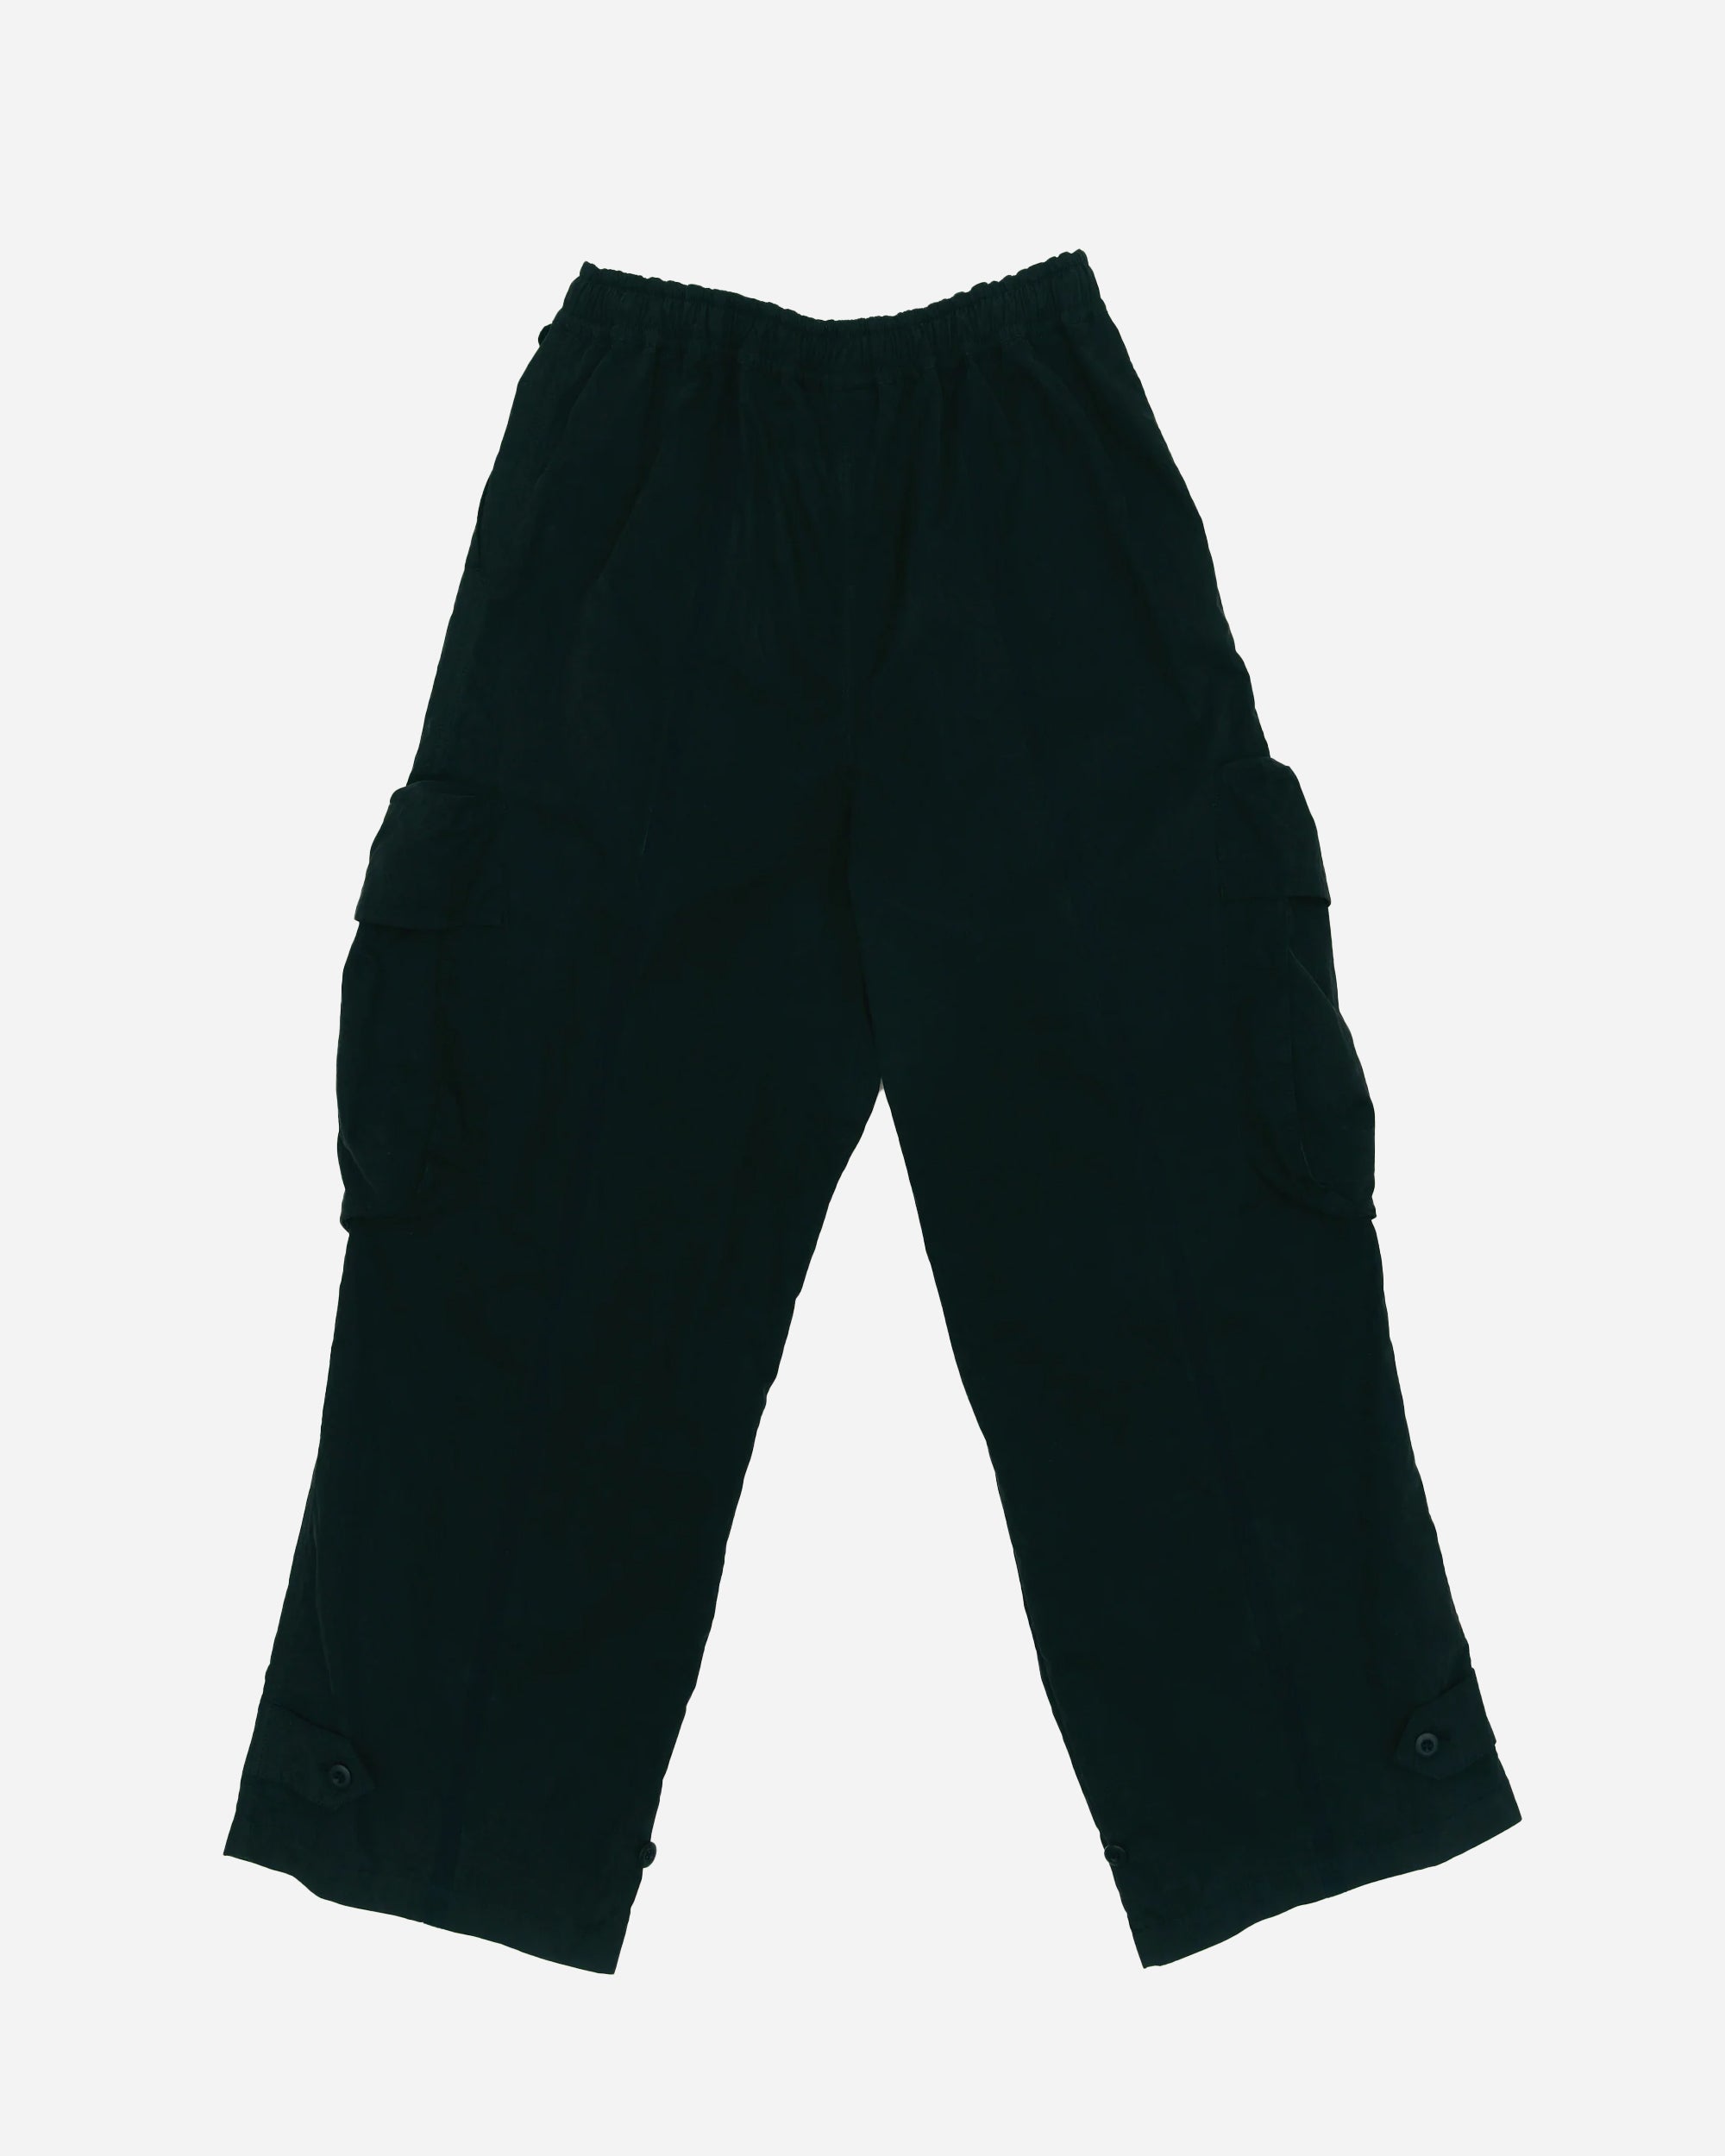 P.A.M Chow Pants BLACK 8555/A-B